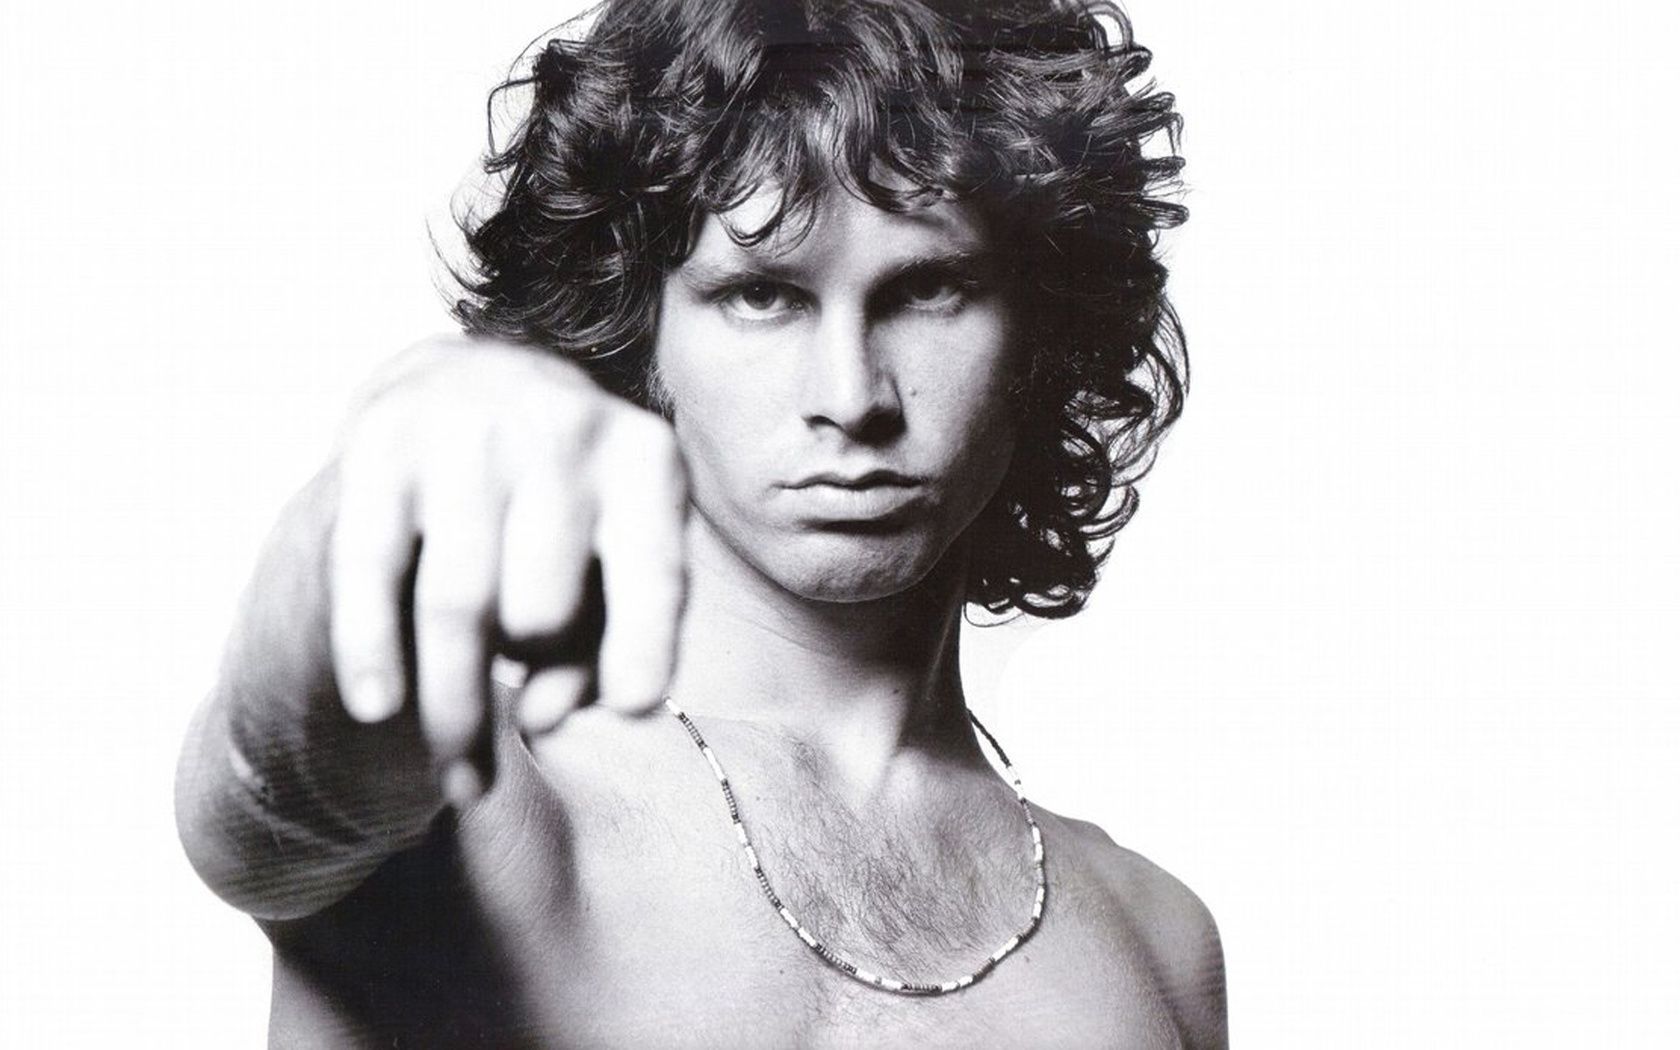 Jim Morrison - The Doors Wallpaper (29018219) - Fanpop